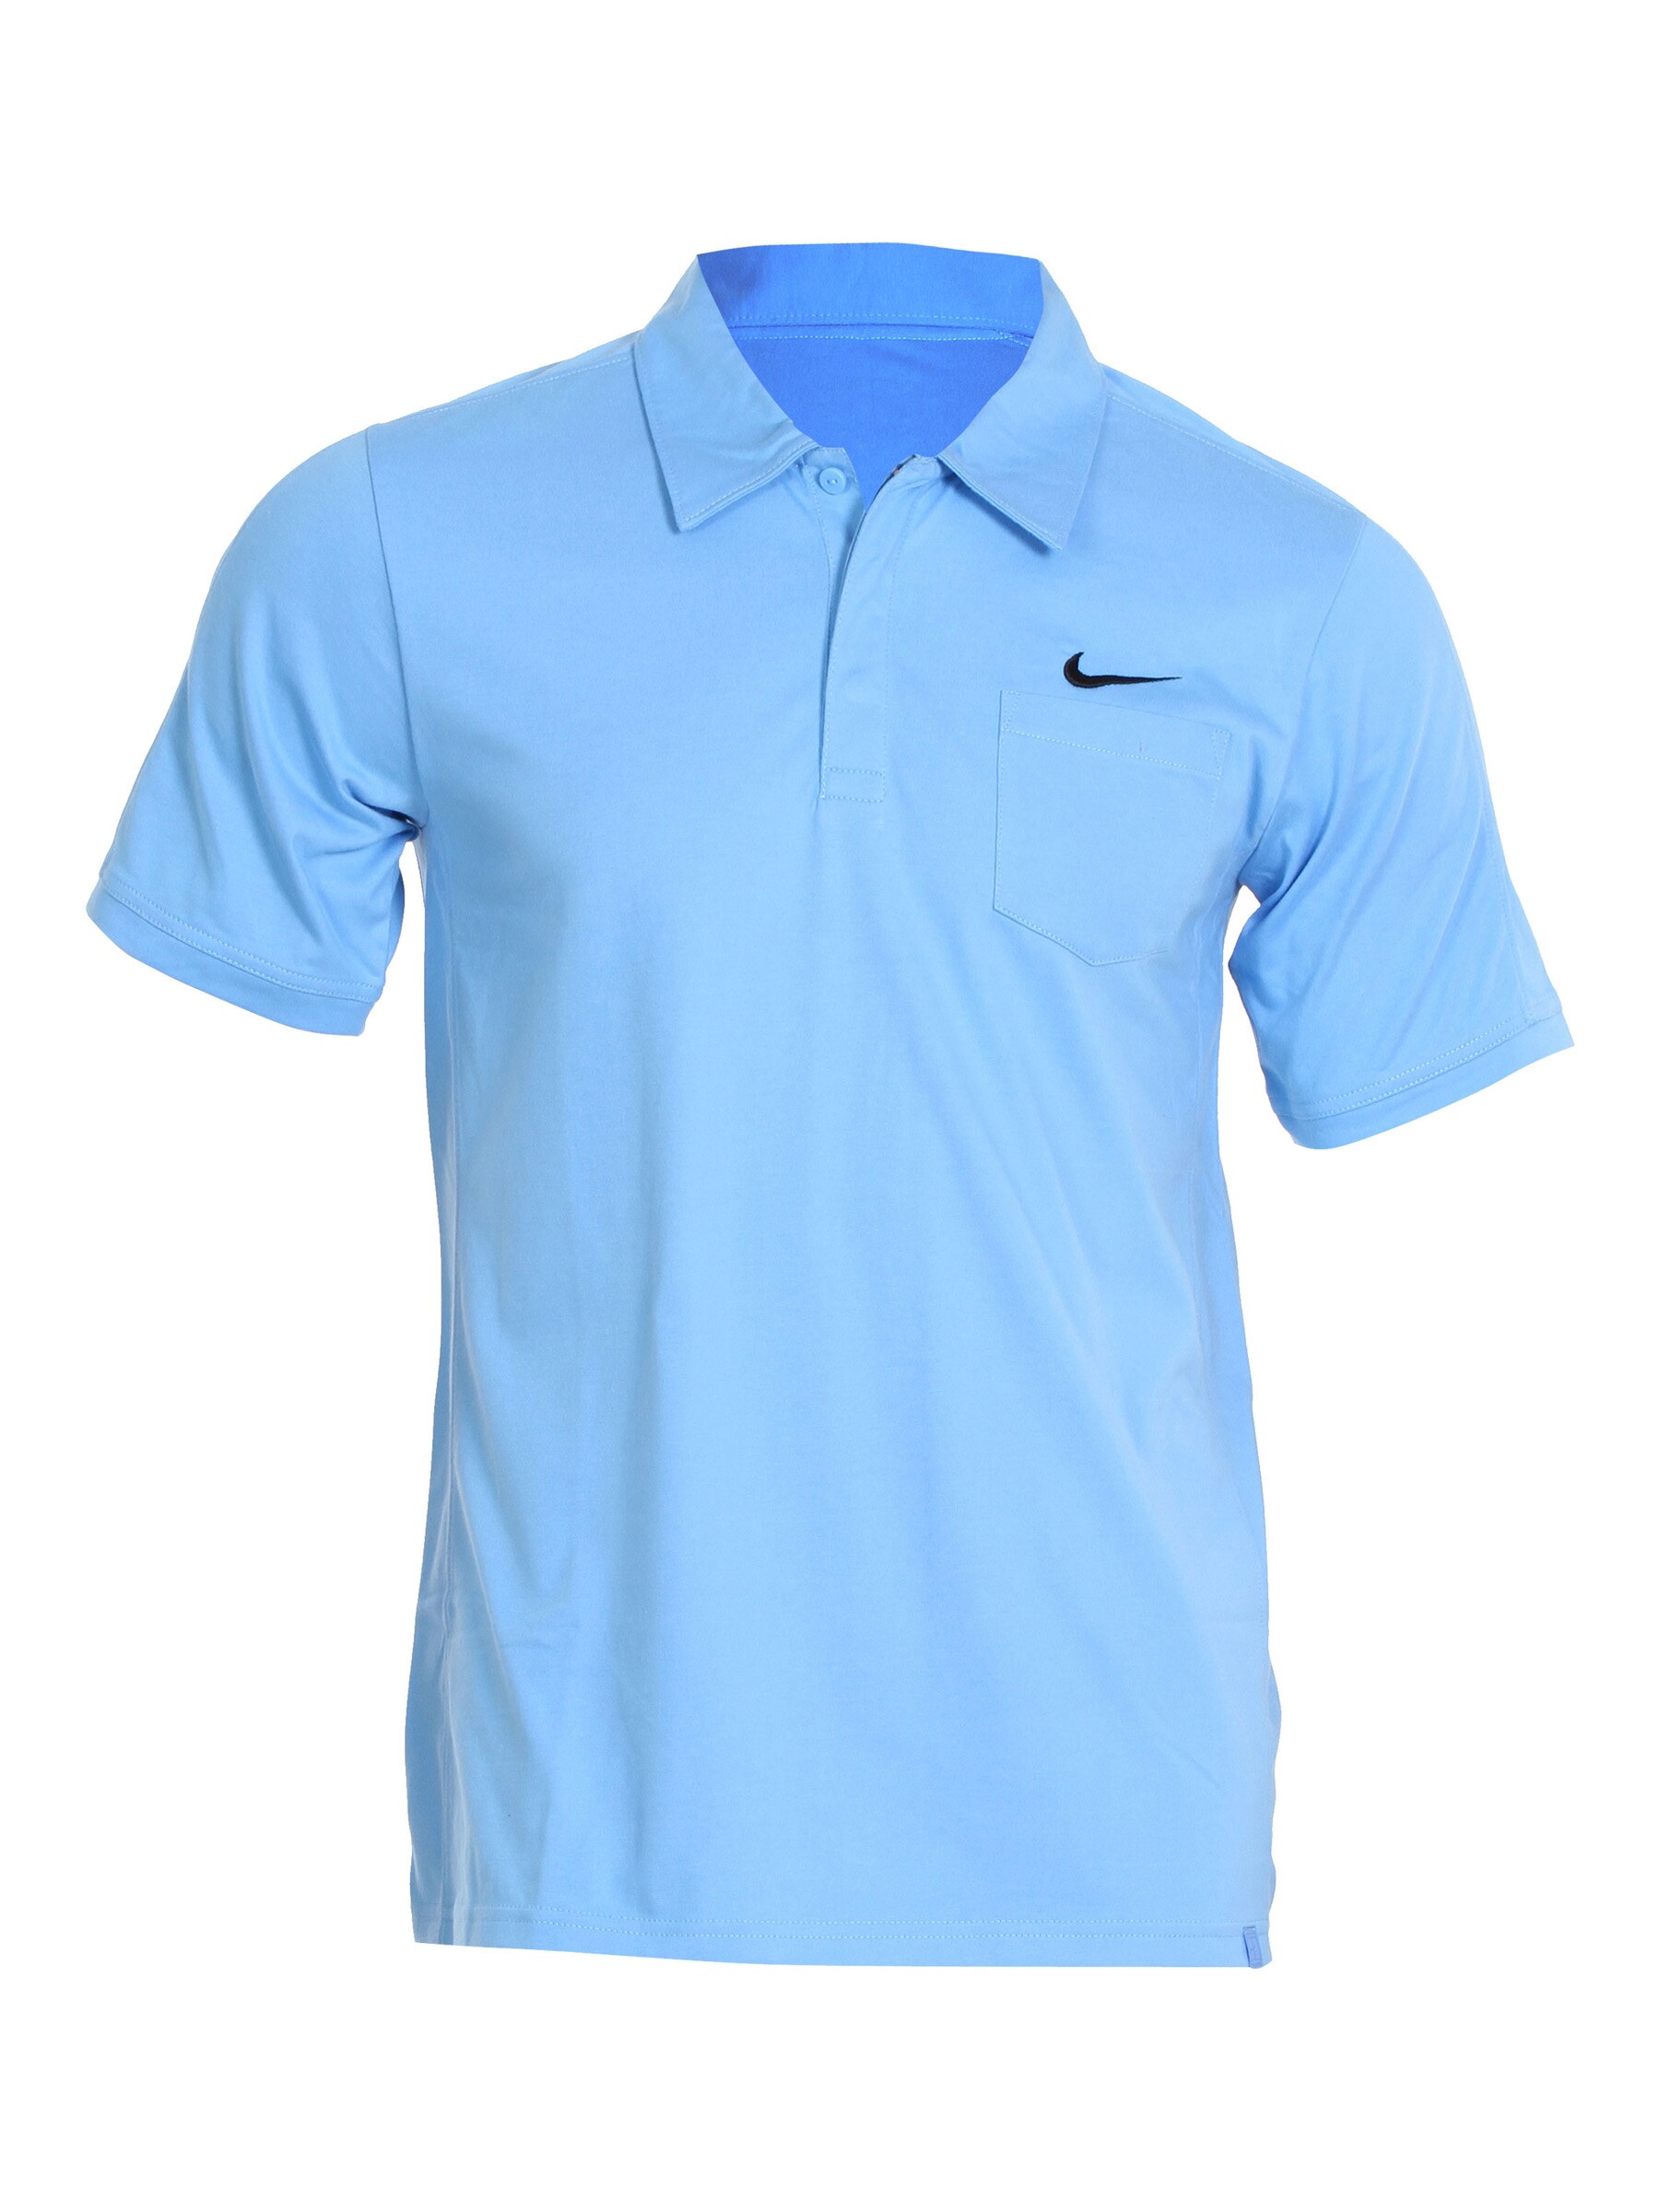 Nike Mens Blue Polo T-shirt